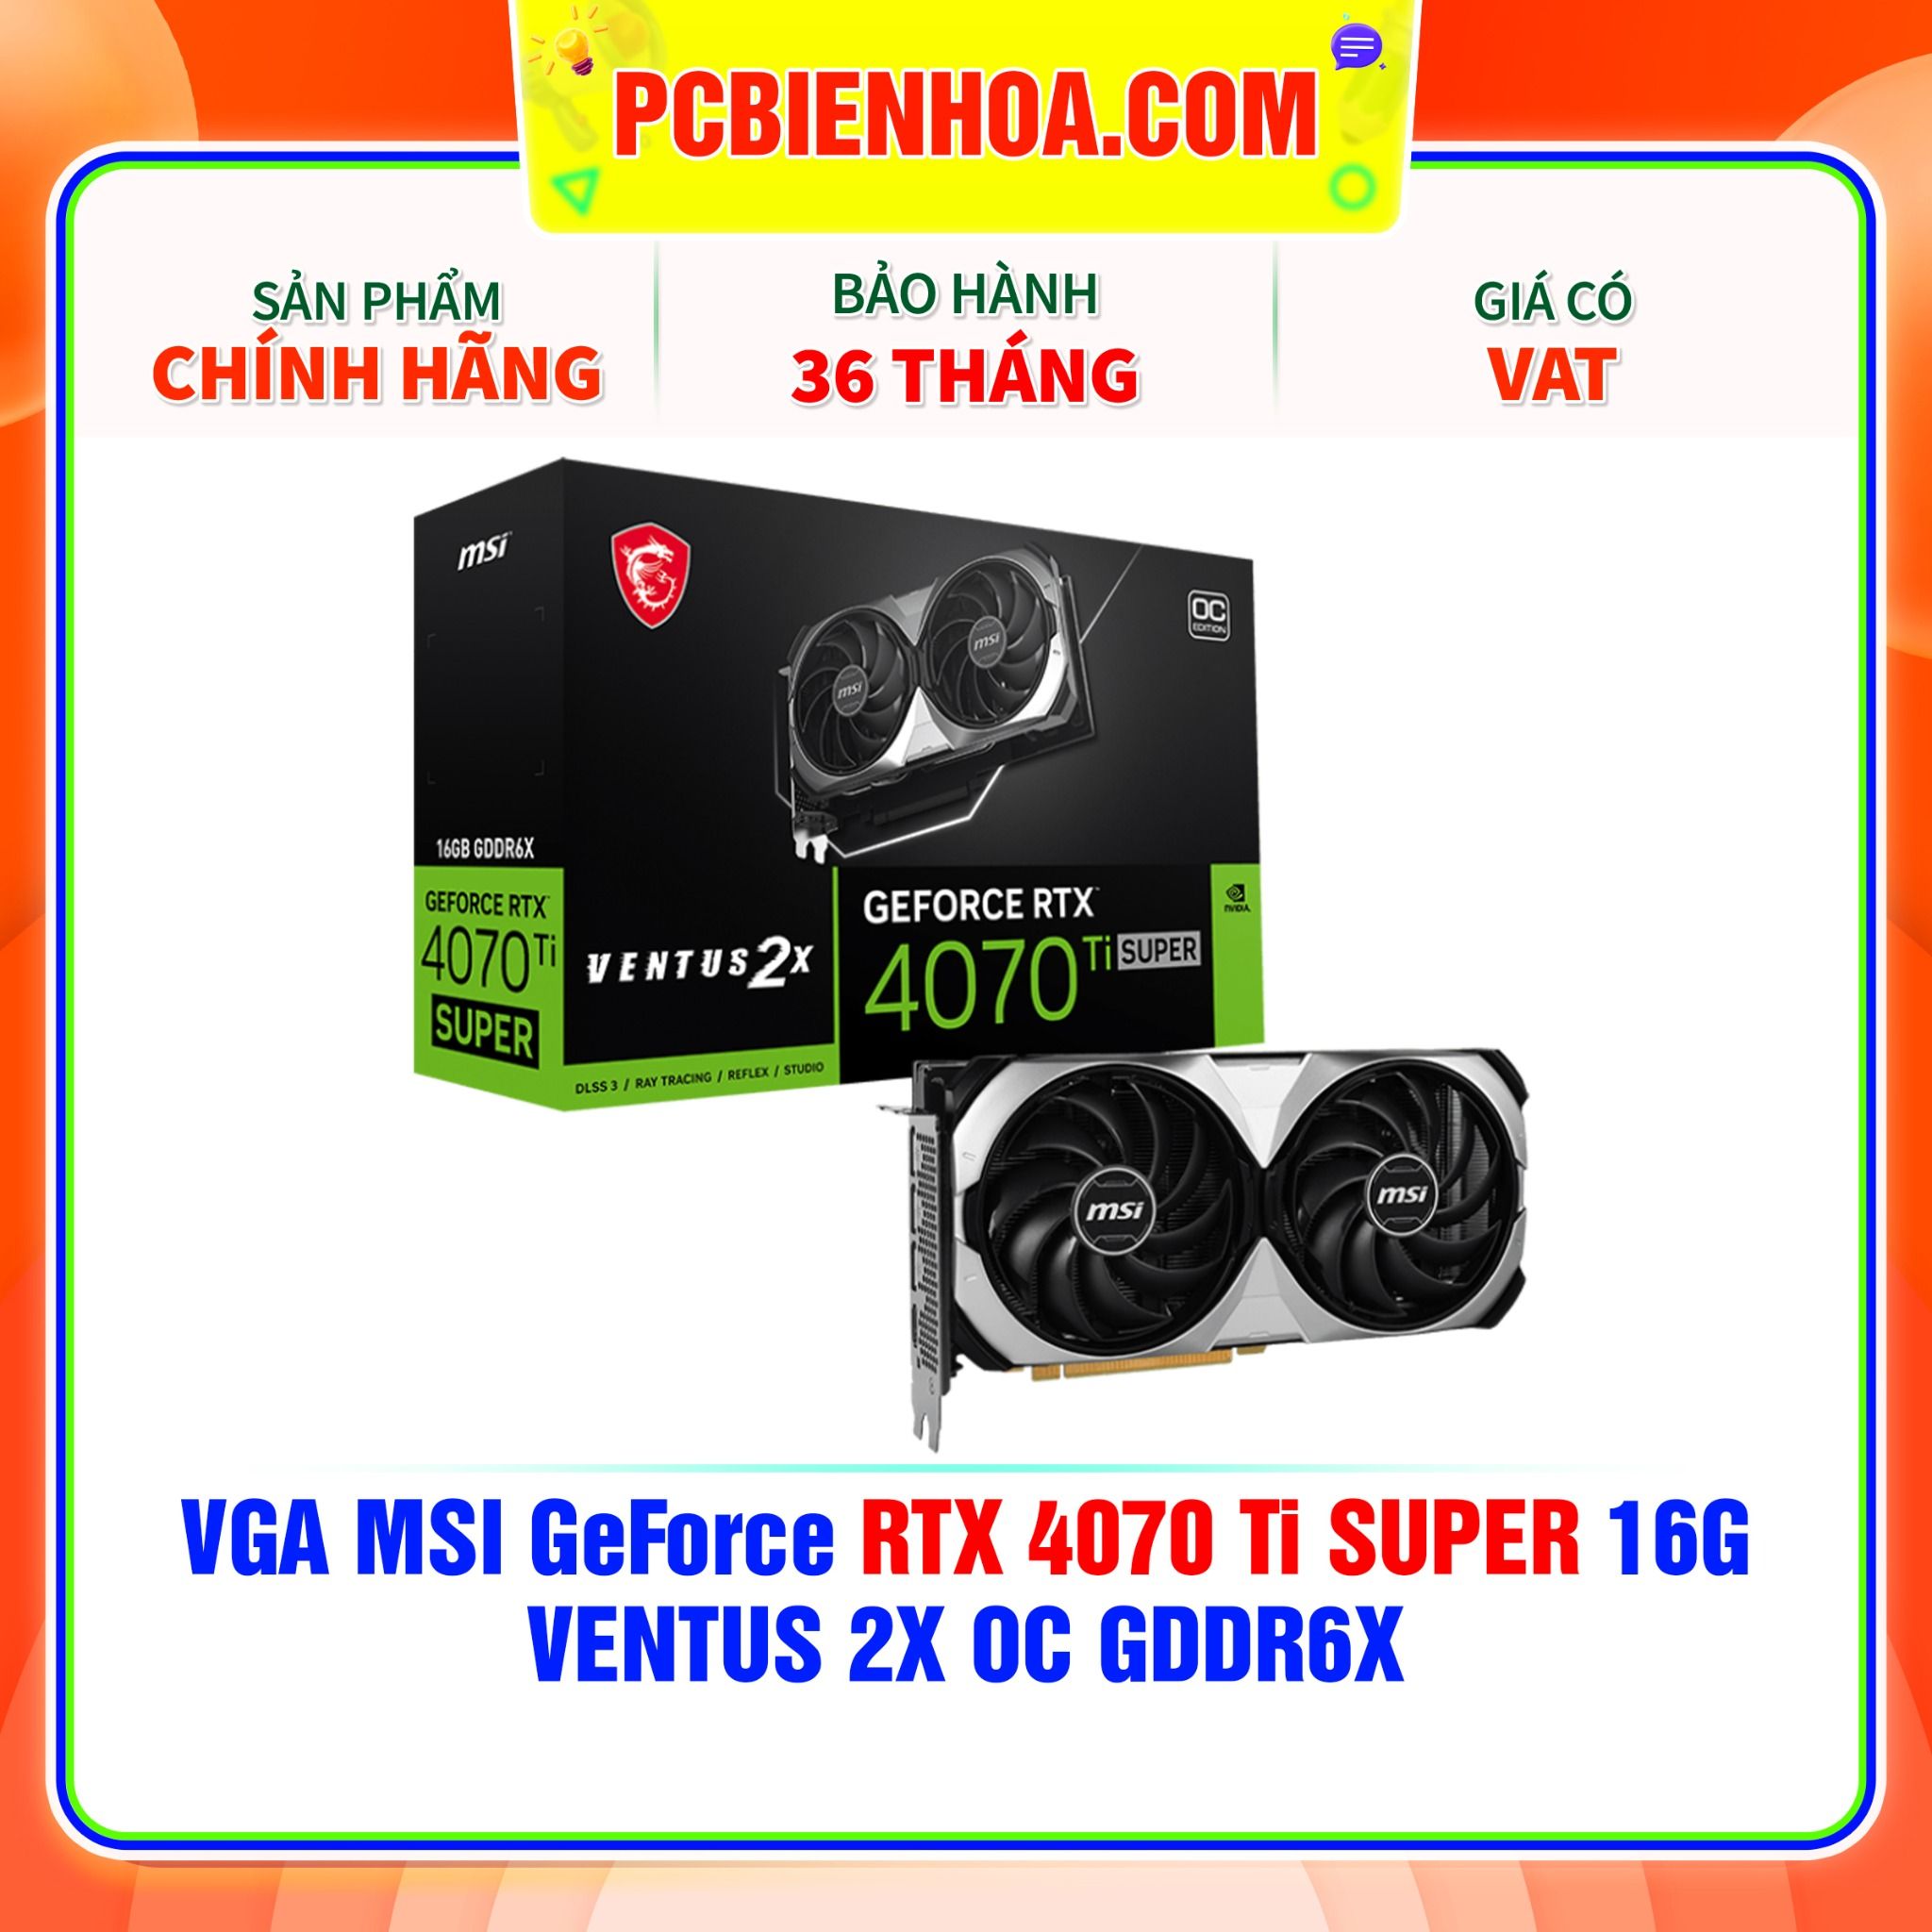  VGA MSI GeForce RTX 4070 Ti SUPER 16G VENTUS 2X OC GDDR6X 